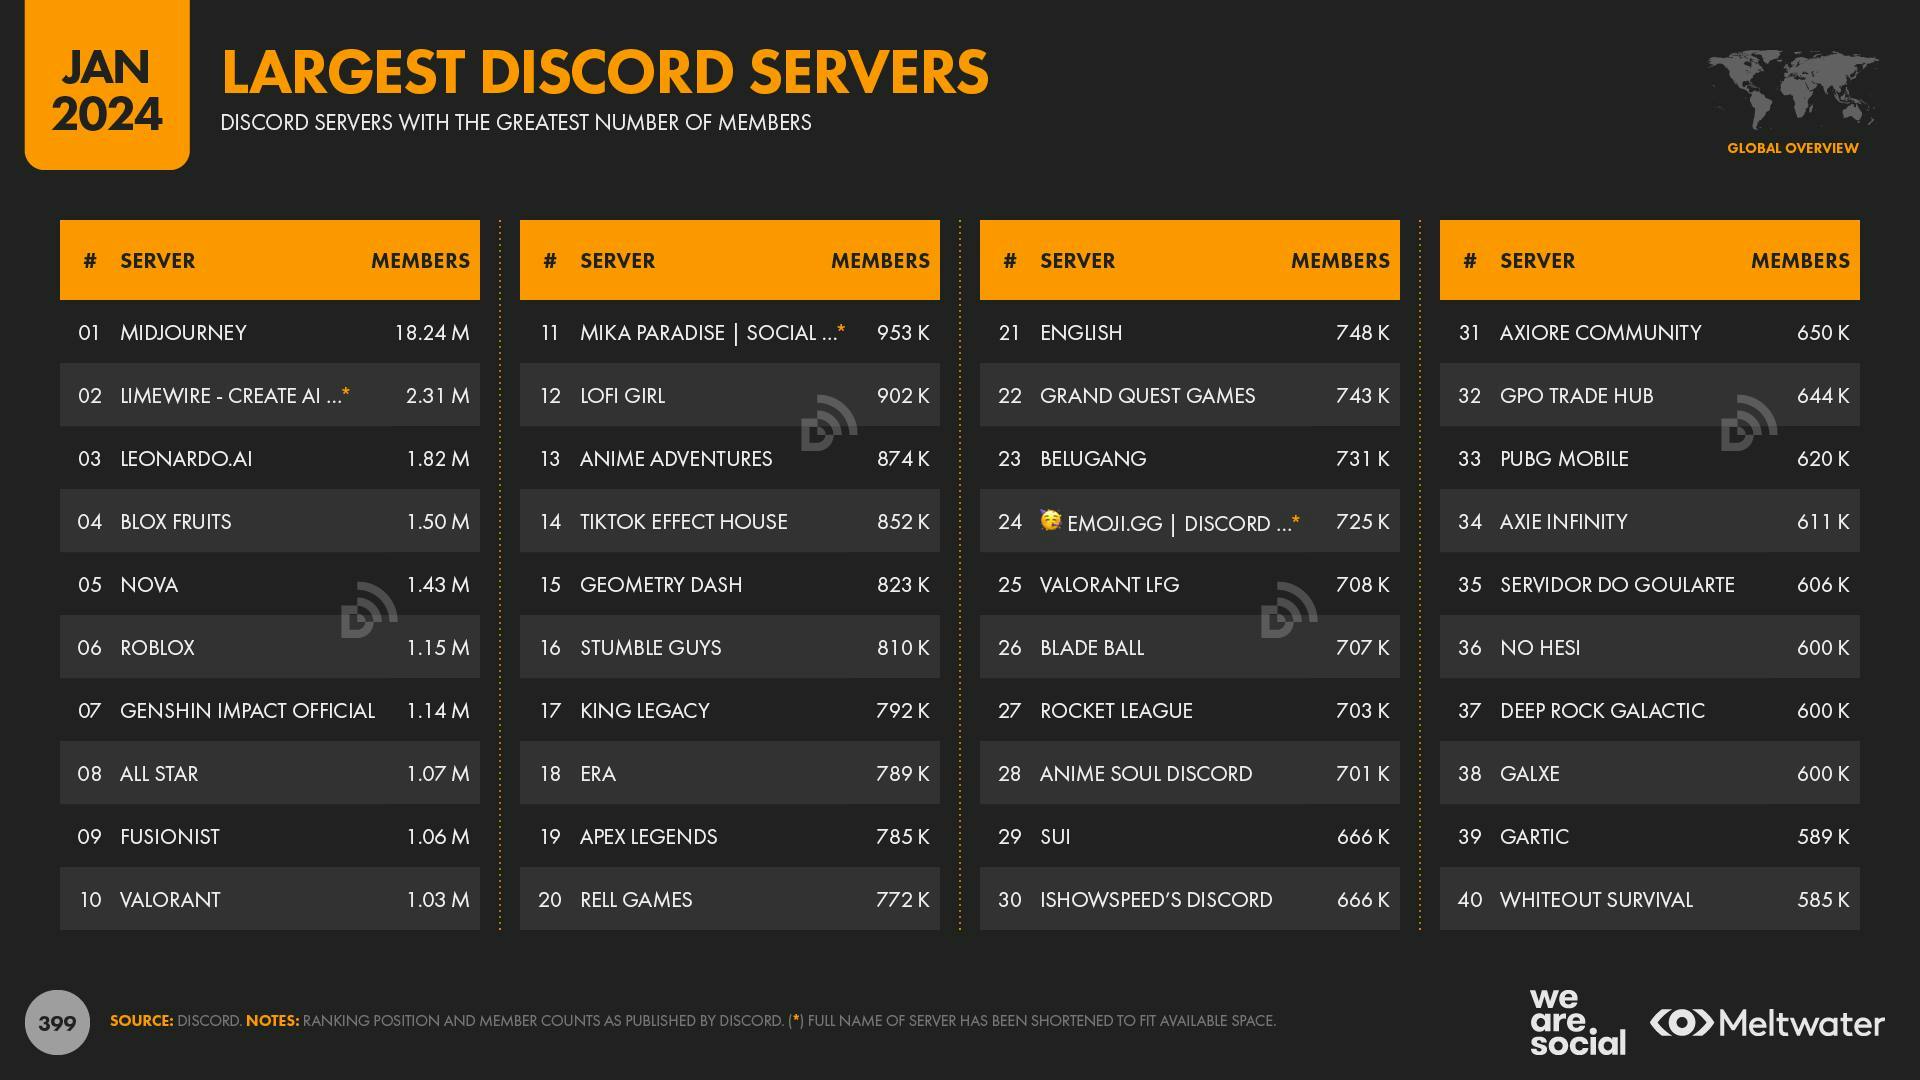 Largest Discord servers